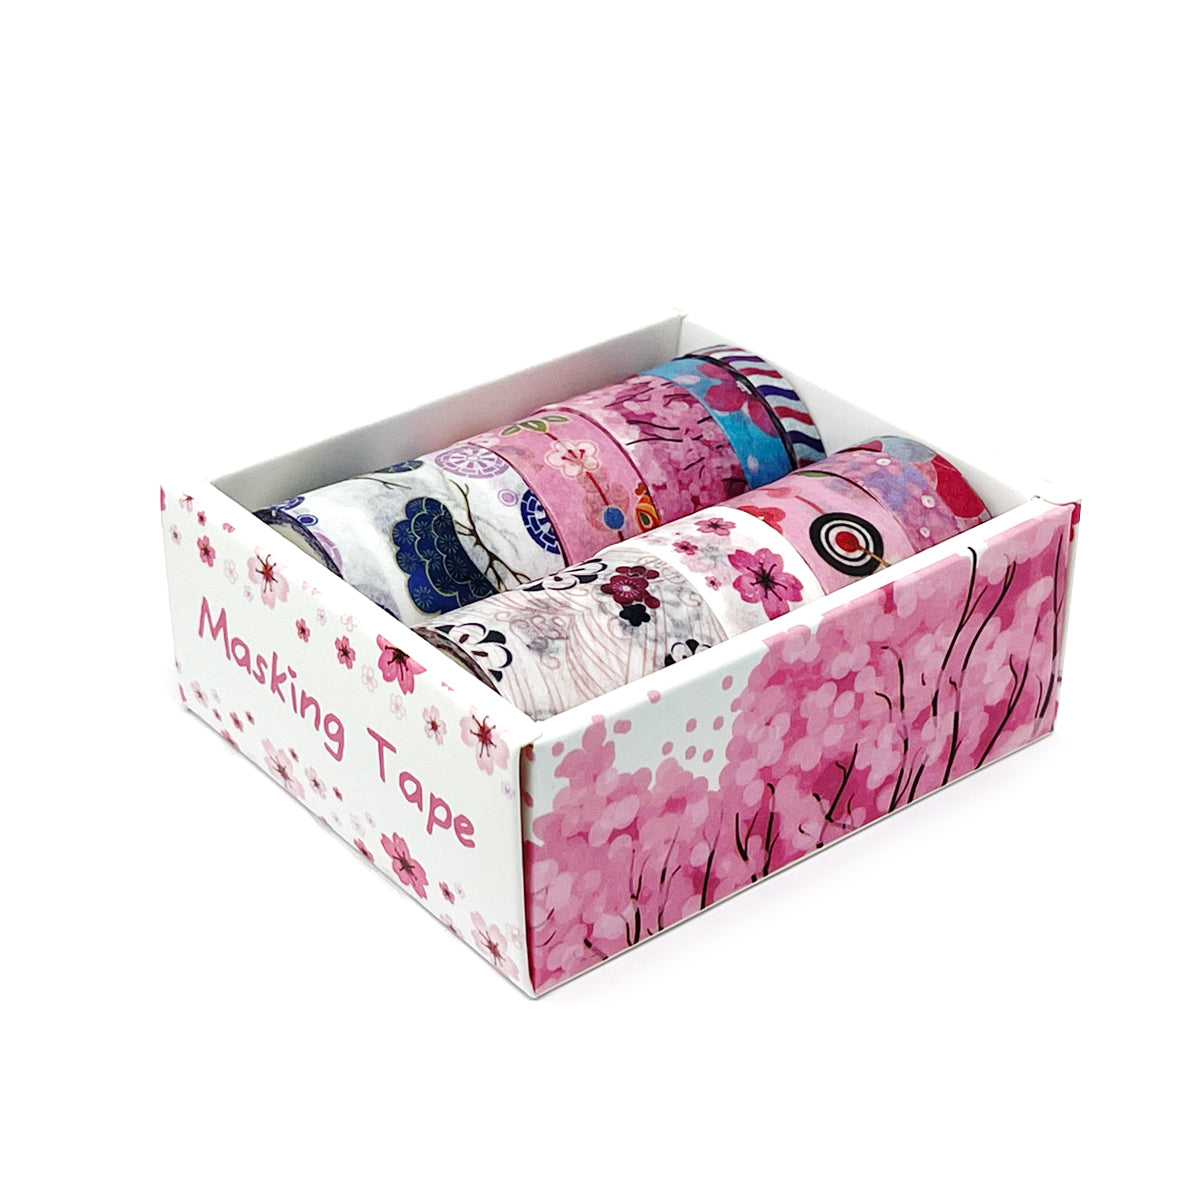 Wrapables Decorative Washi Tape Box Set (10 Rolls) Romantic Pink